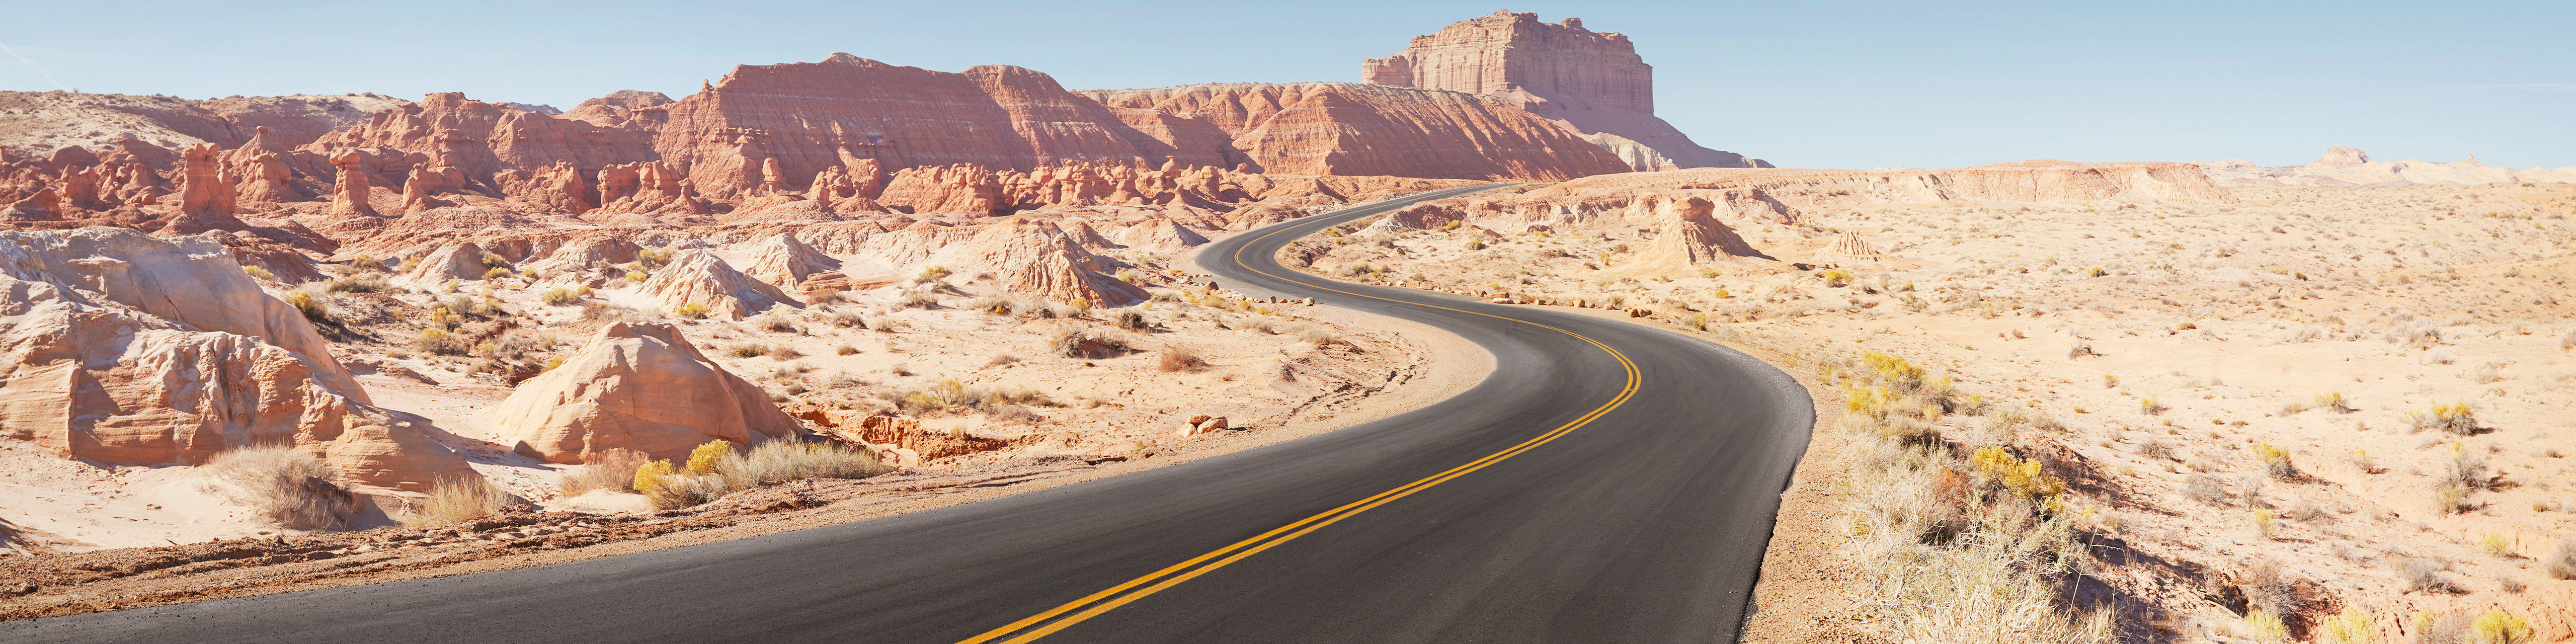 Winding empty road through arid desert landscape panoramic